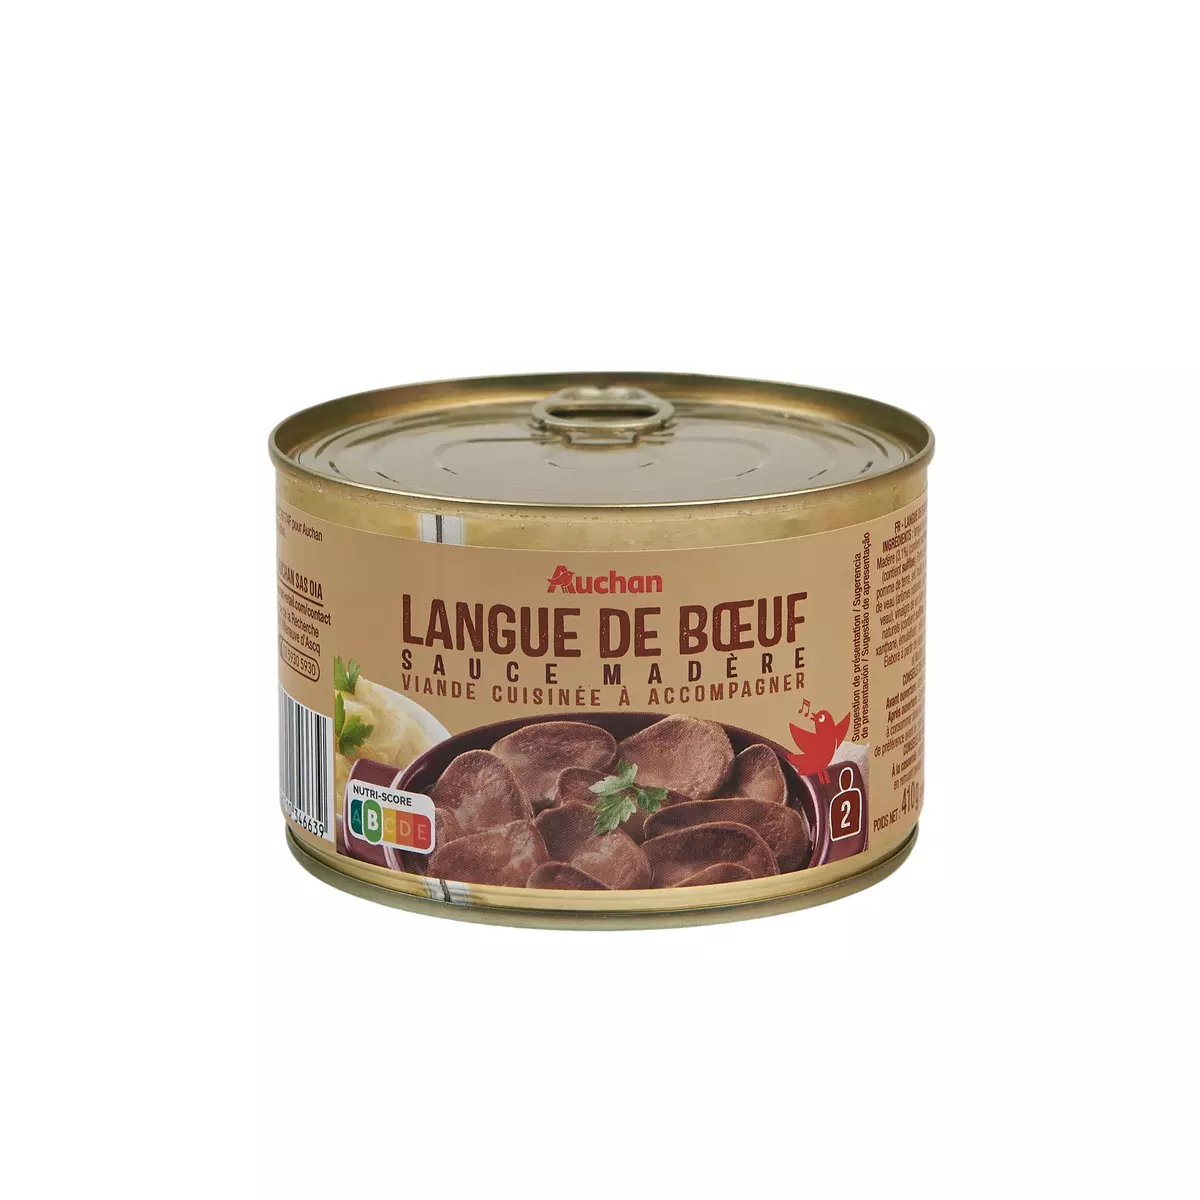 AUCHAN Langue de bœuf sauce madére 410g